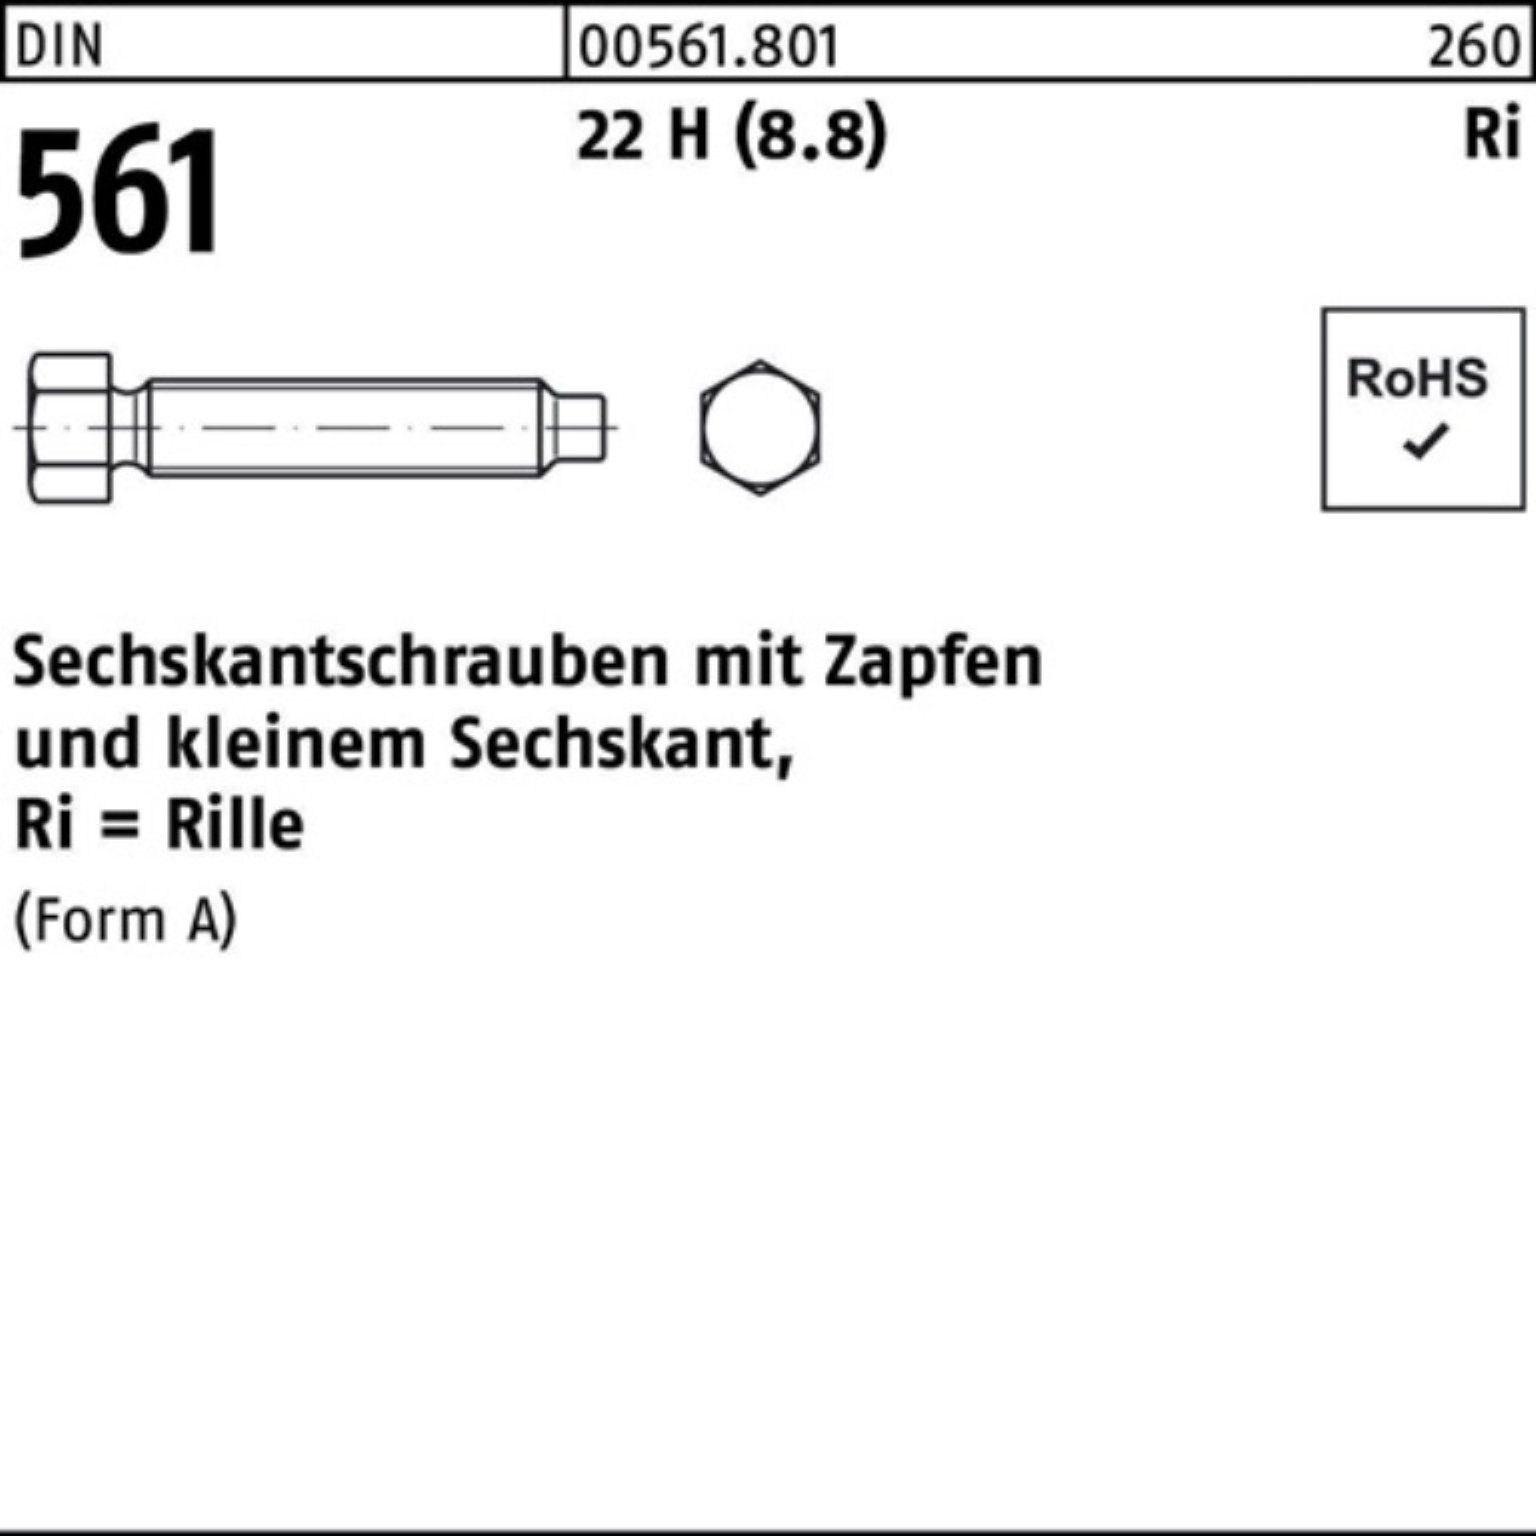 10x 100er DIN H 25 Reyher Sechskantschraube Sechskantschraube 22 S (8.8) 100 Zapfen 561 AM Pack